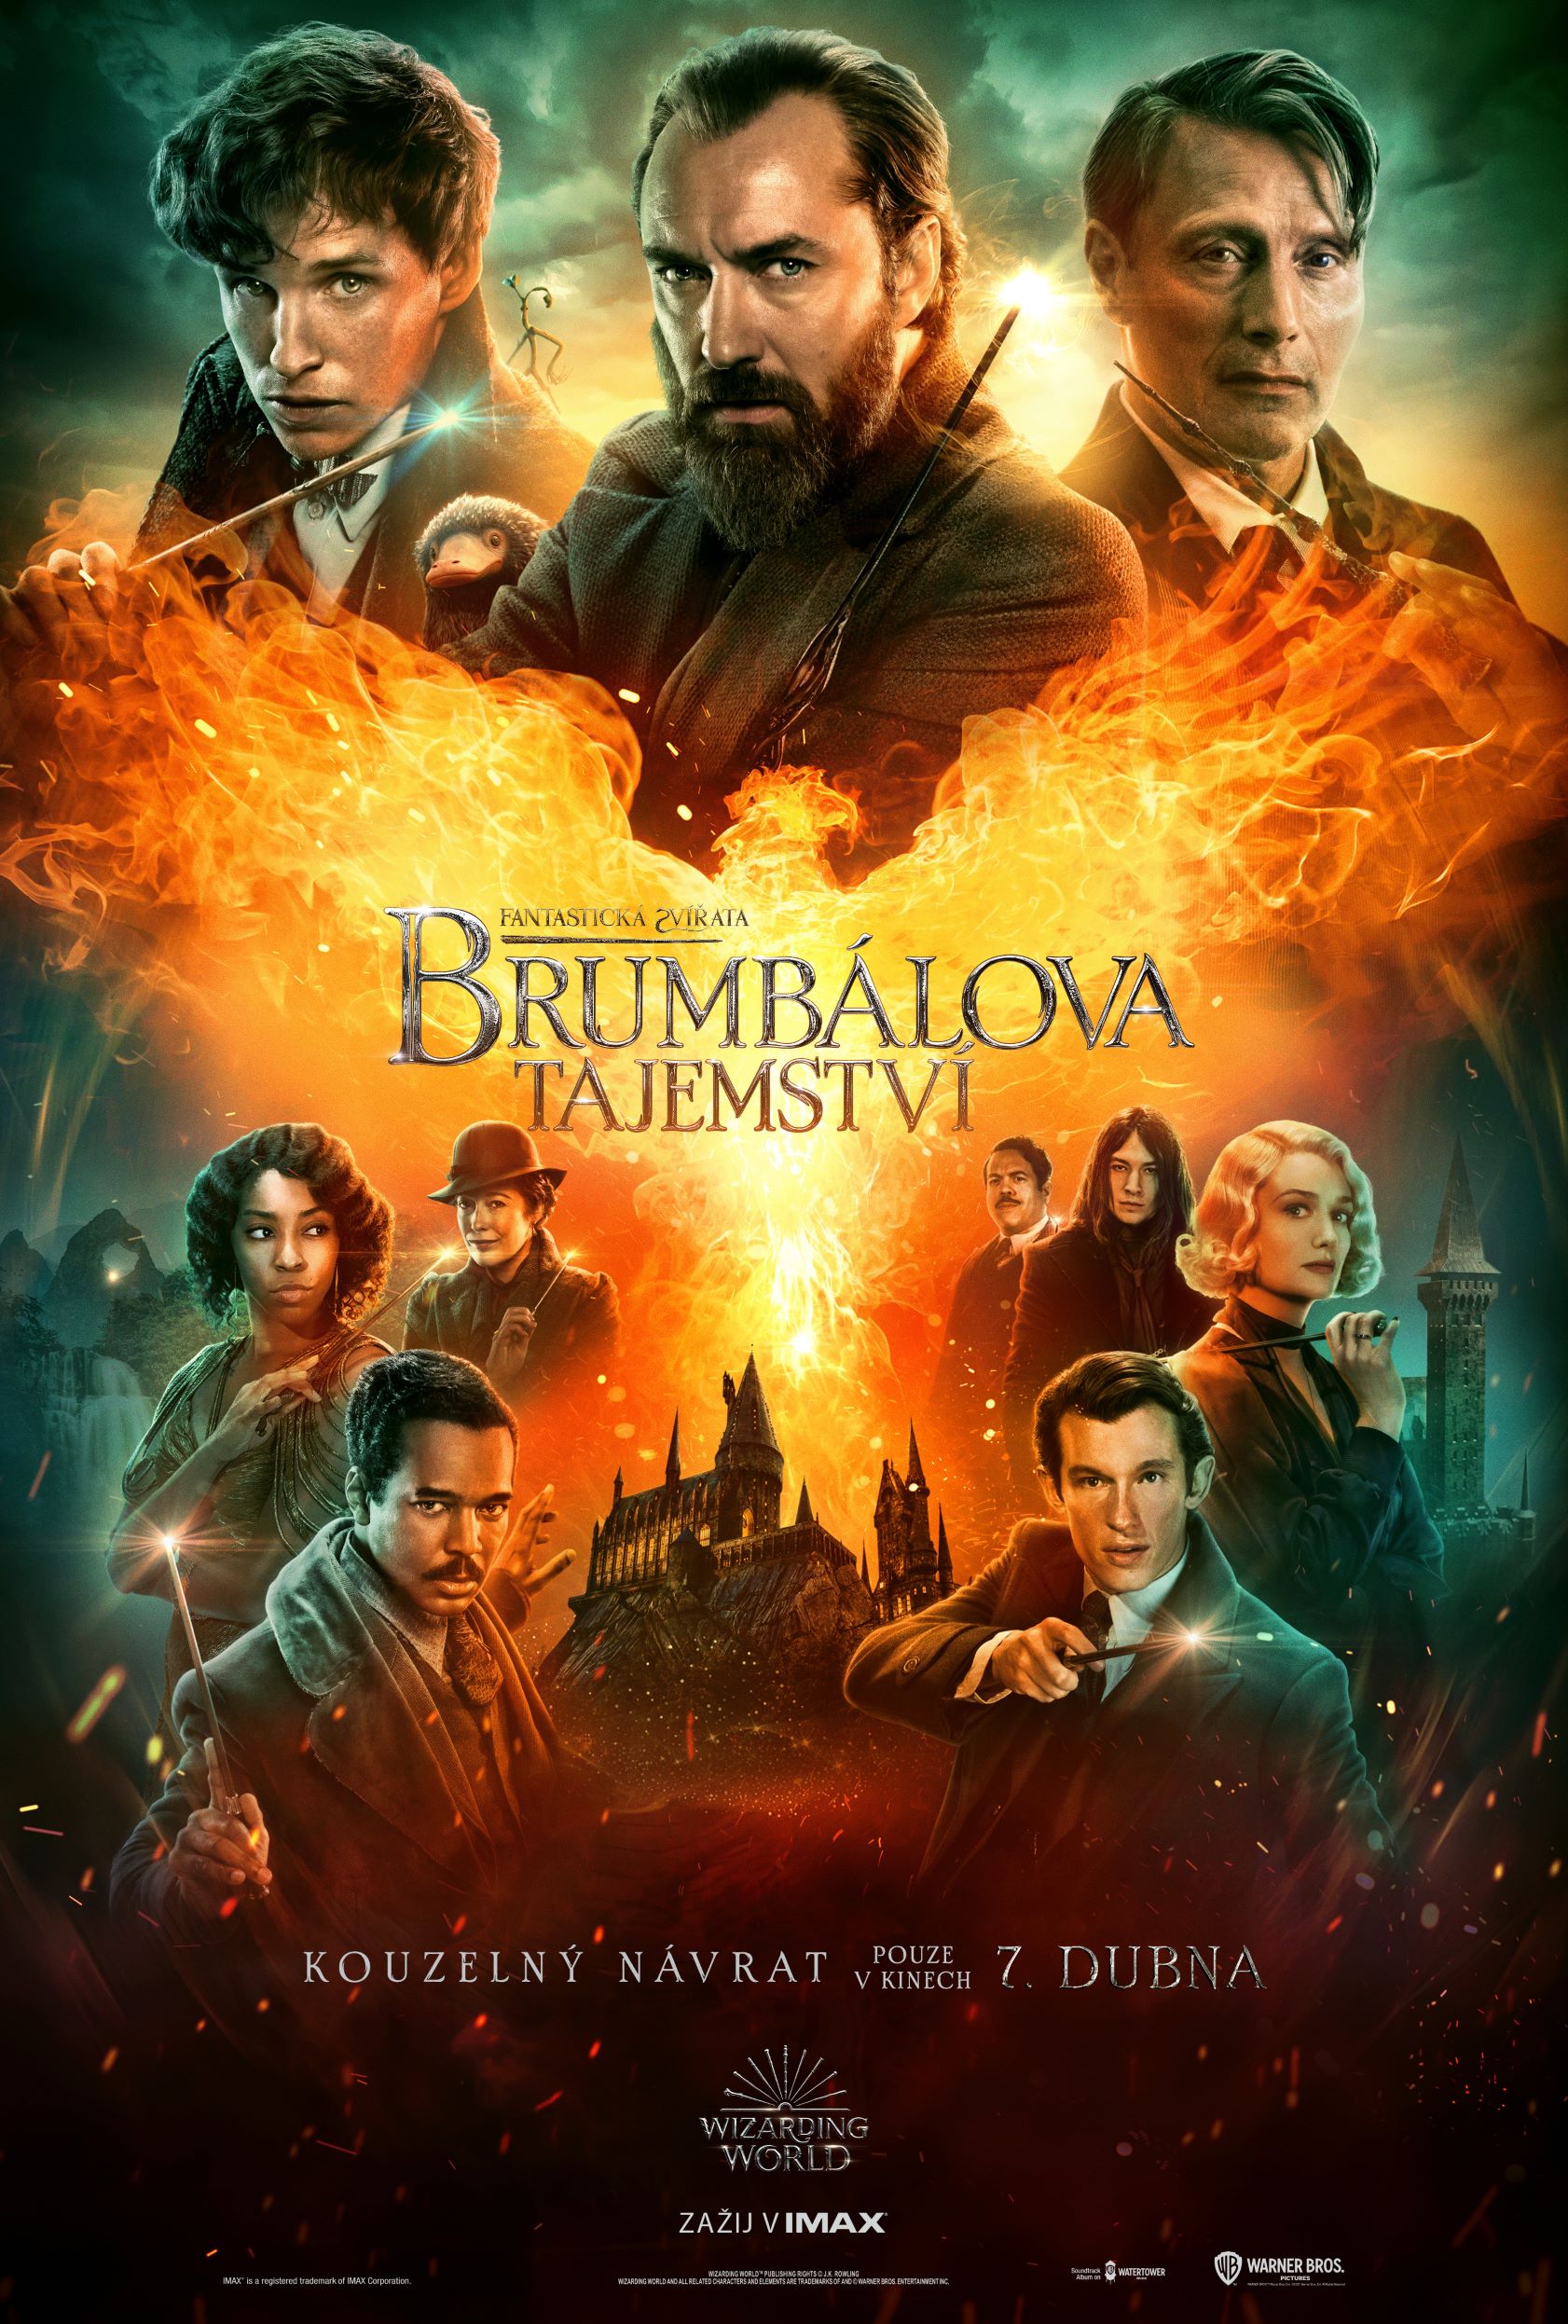 Stiahni si Filmy CZ/SK dabing Fantasticka zvirata: Brumbalova tajemstvi / Fantastic Beasts: The Secrets of Dumbledore (2022)(CZ/SK)[WebRip] = CSFD 61%